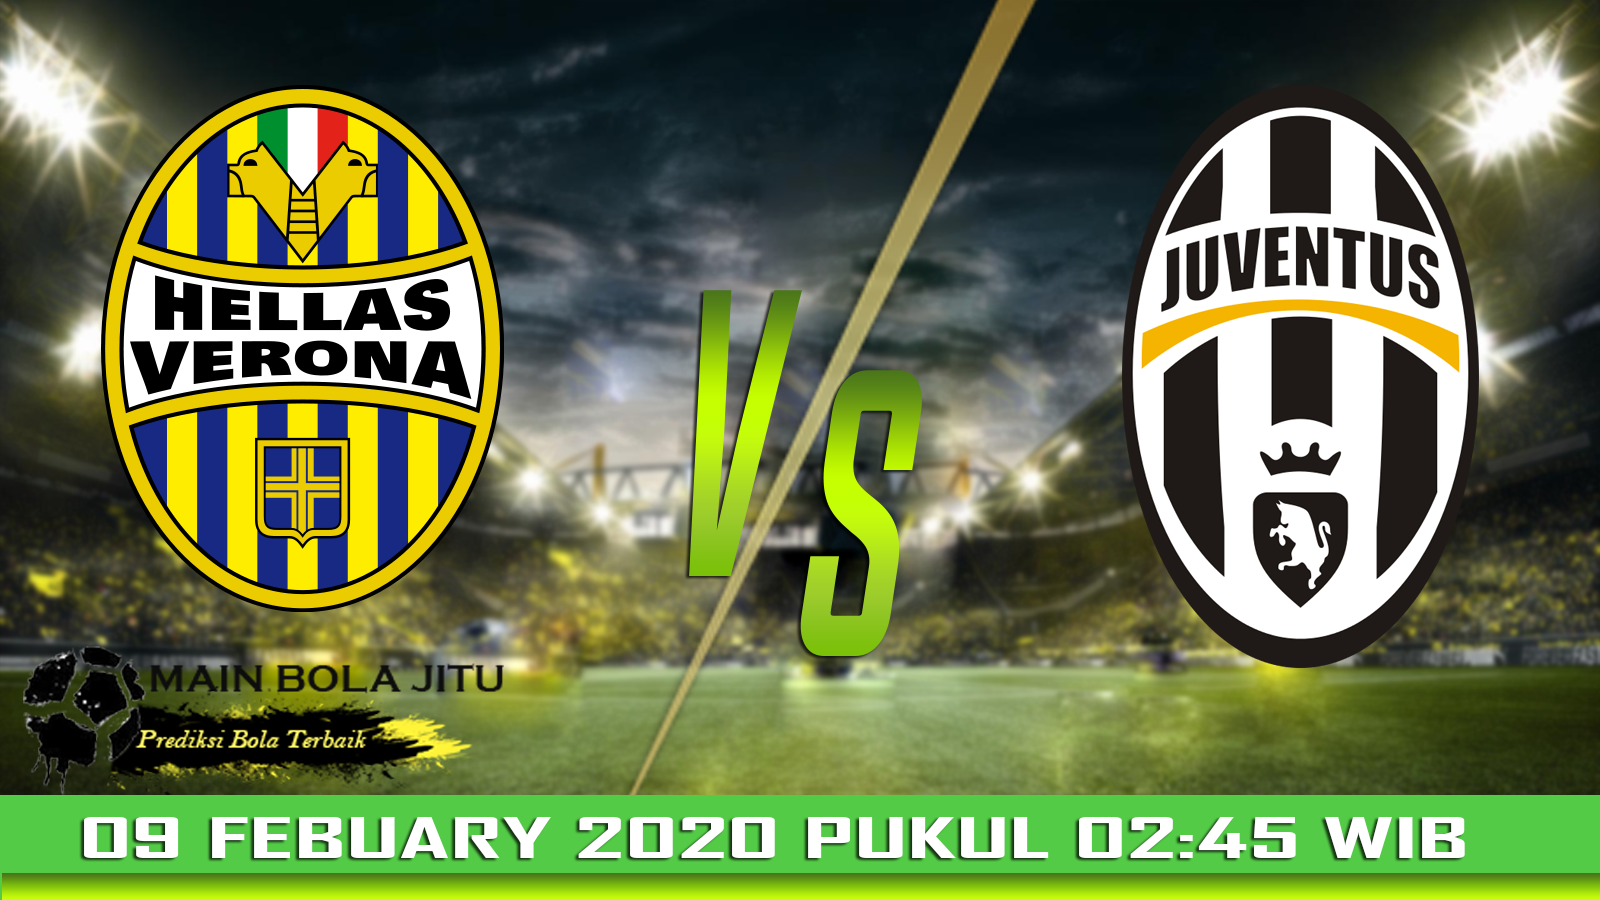 Prediksi Bola Verona vs Juventus tanggal 09-02-2020